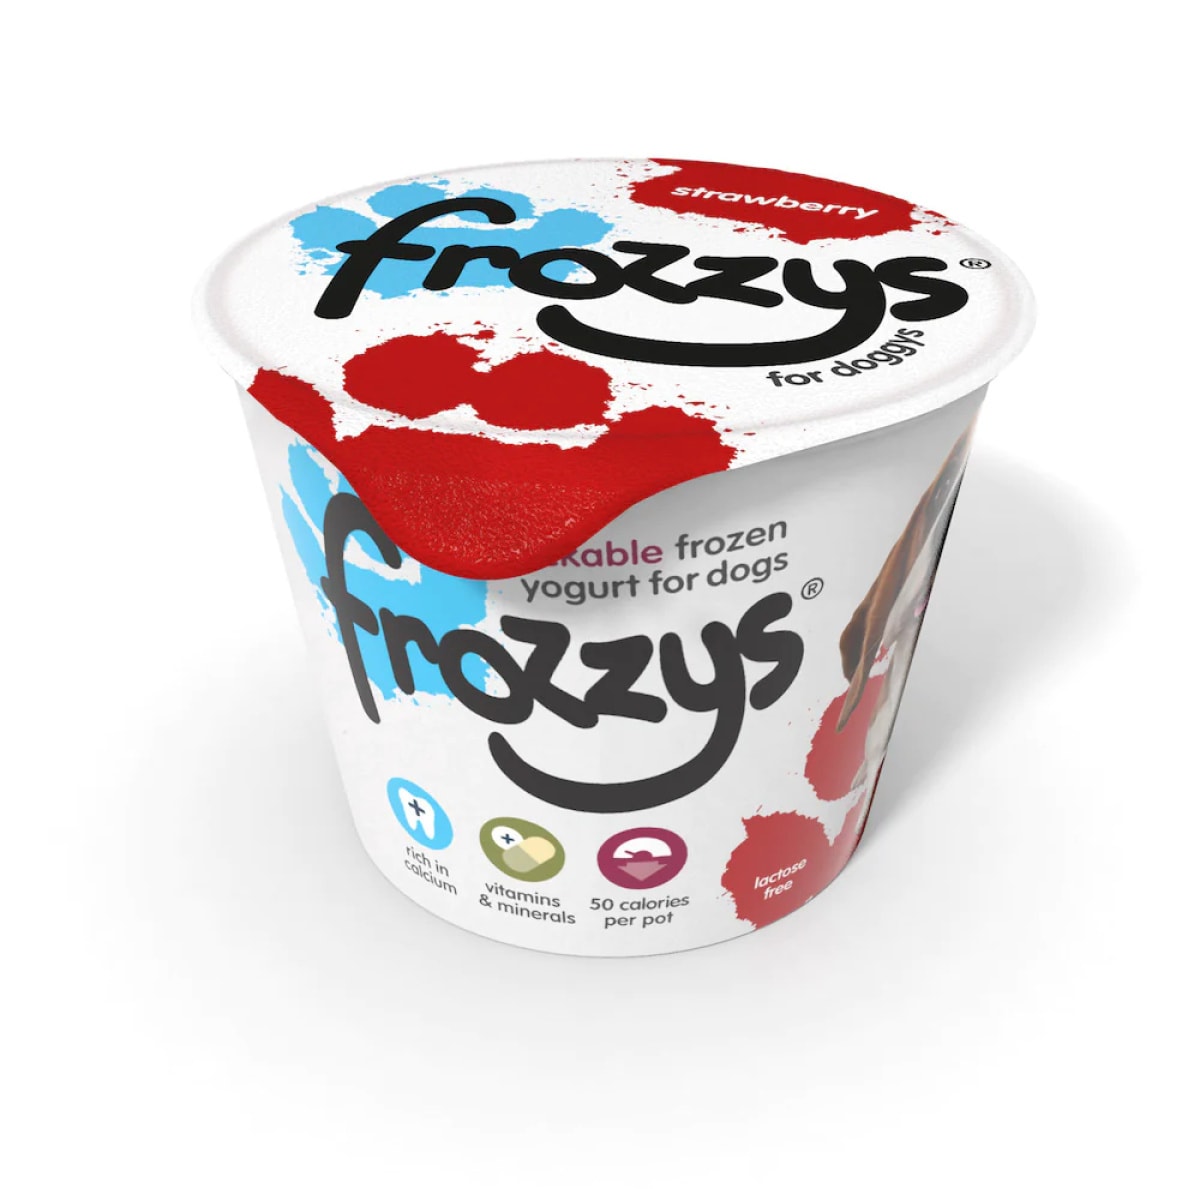 Frozzys Frozen Yogurt - Strawberry Main Image